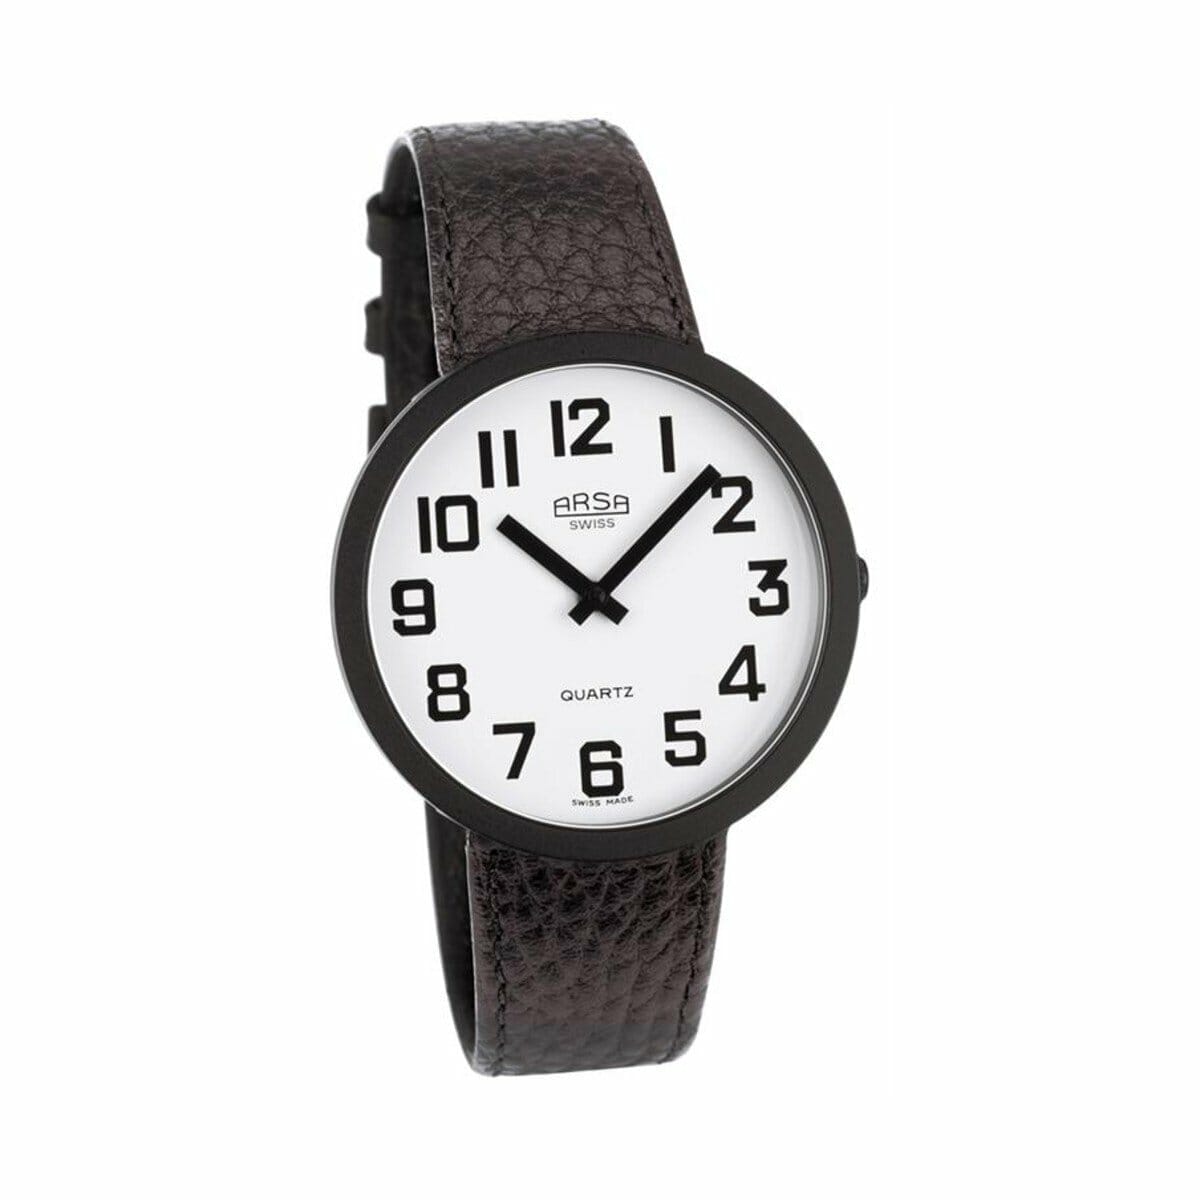 Behoren wacht Geestig Arsa Low Vision horloge - Wit - Online bestellen - Low Vision Shop